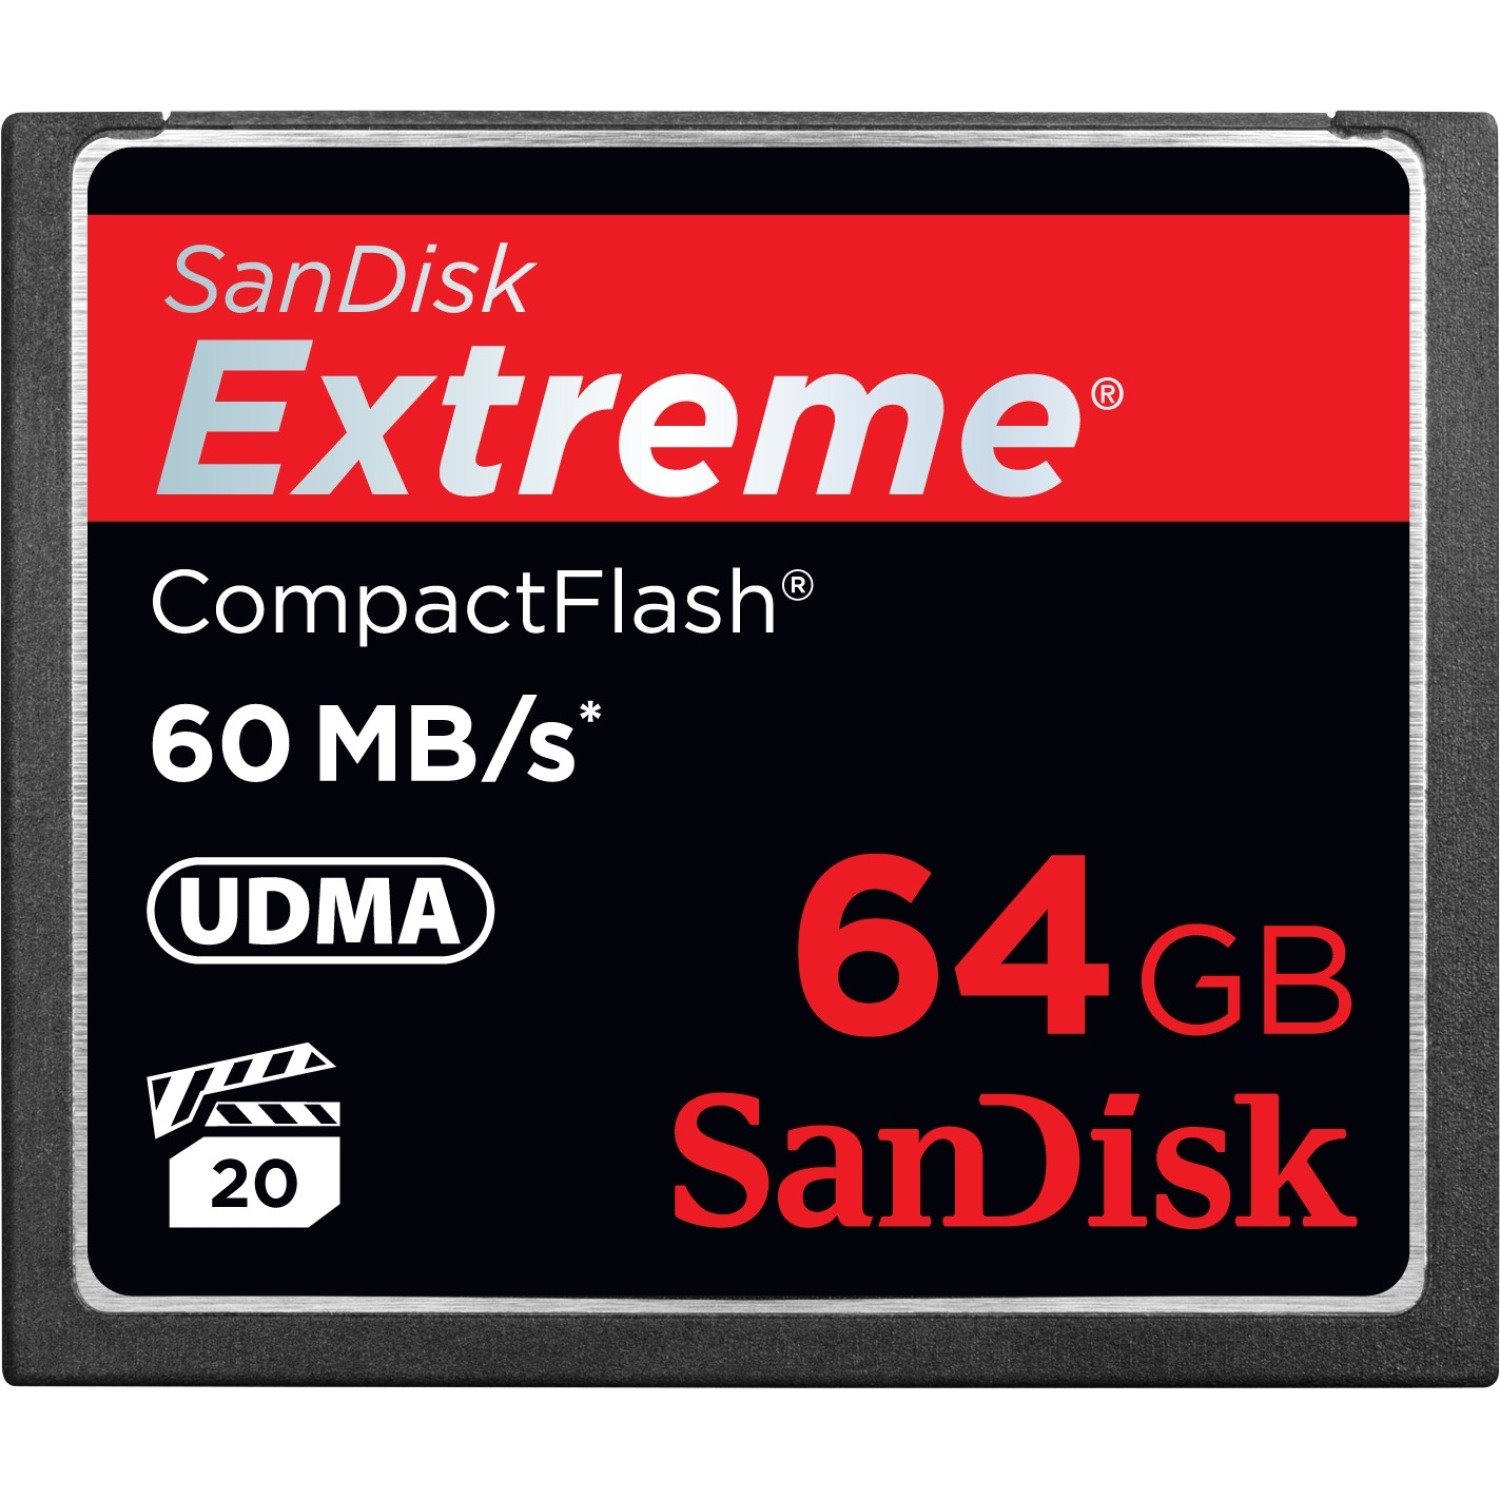 SanDisk Extreme 64 GB CompactFlash